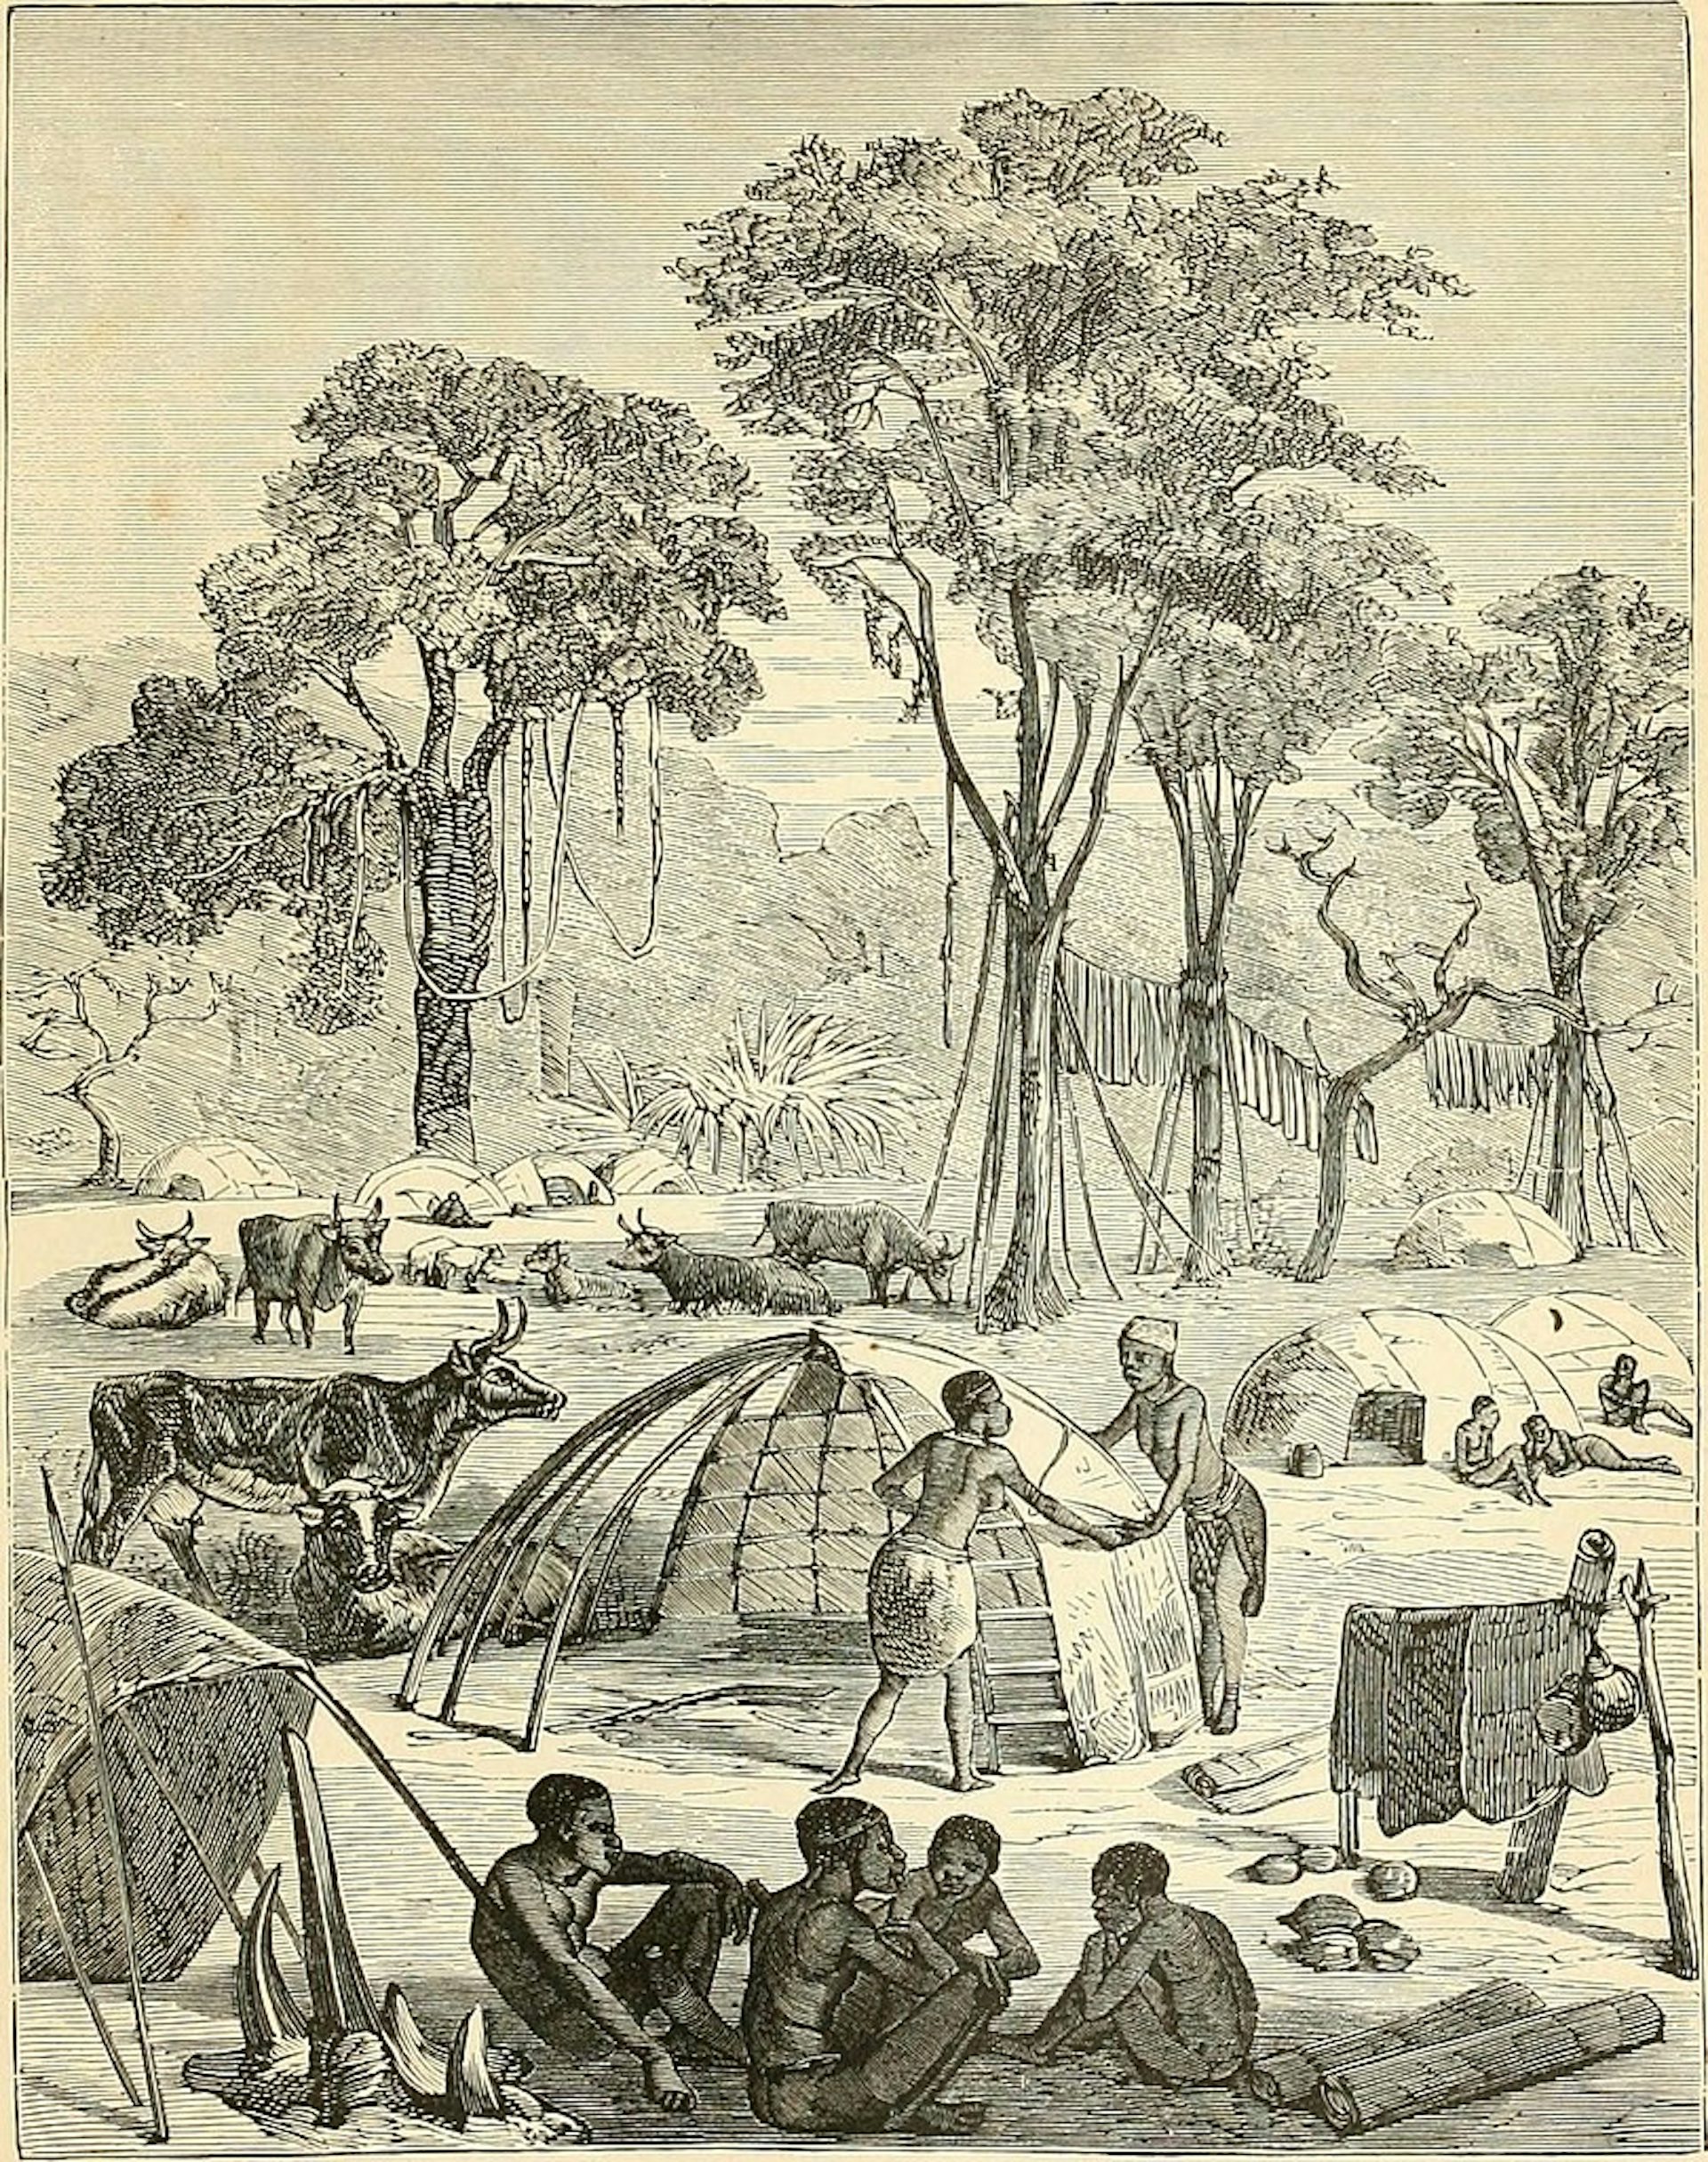 An illustration of Khoekhoe huts by John George Wood, (1878).